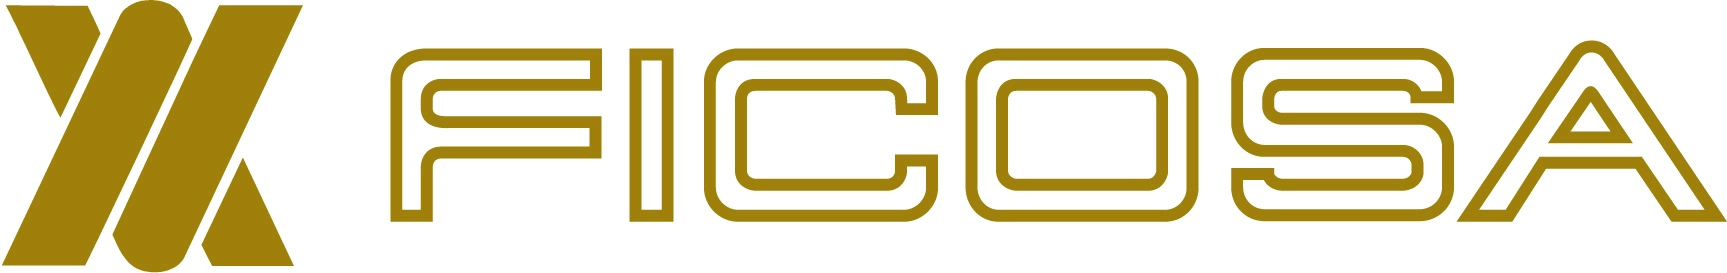 FICOSA logo